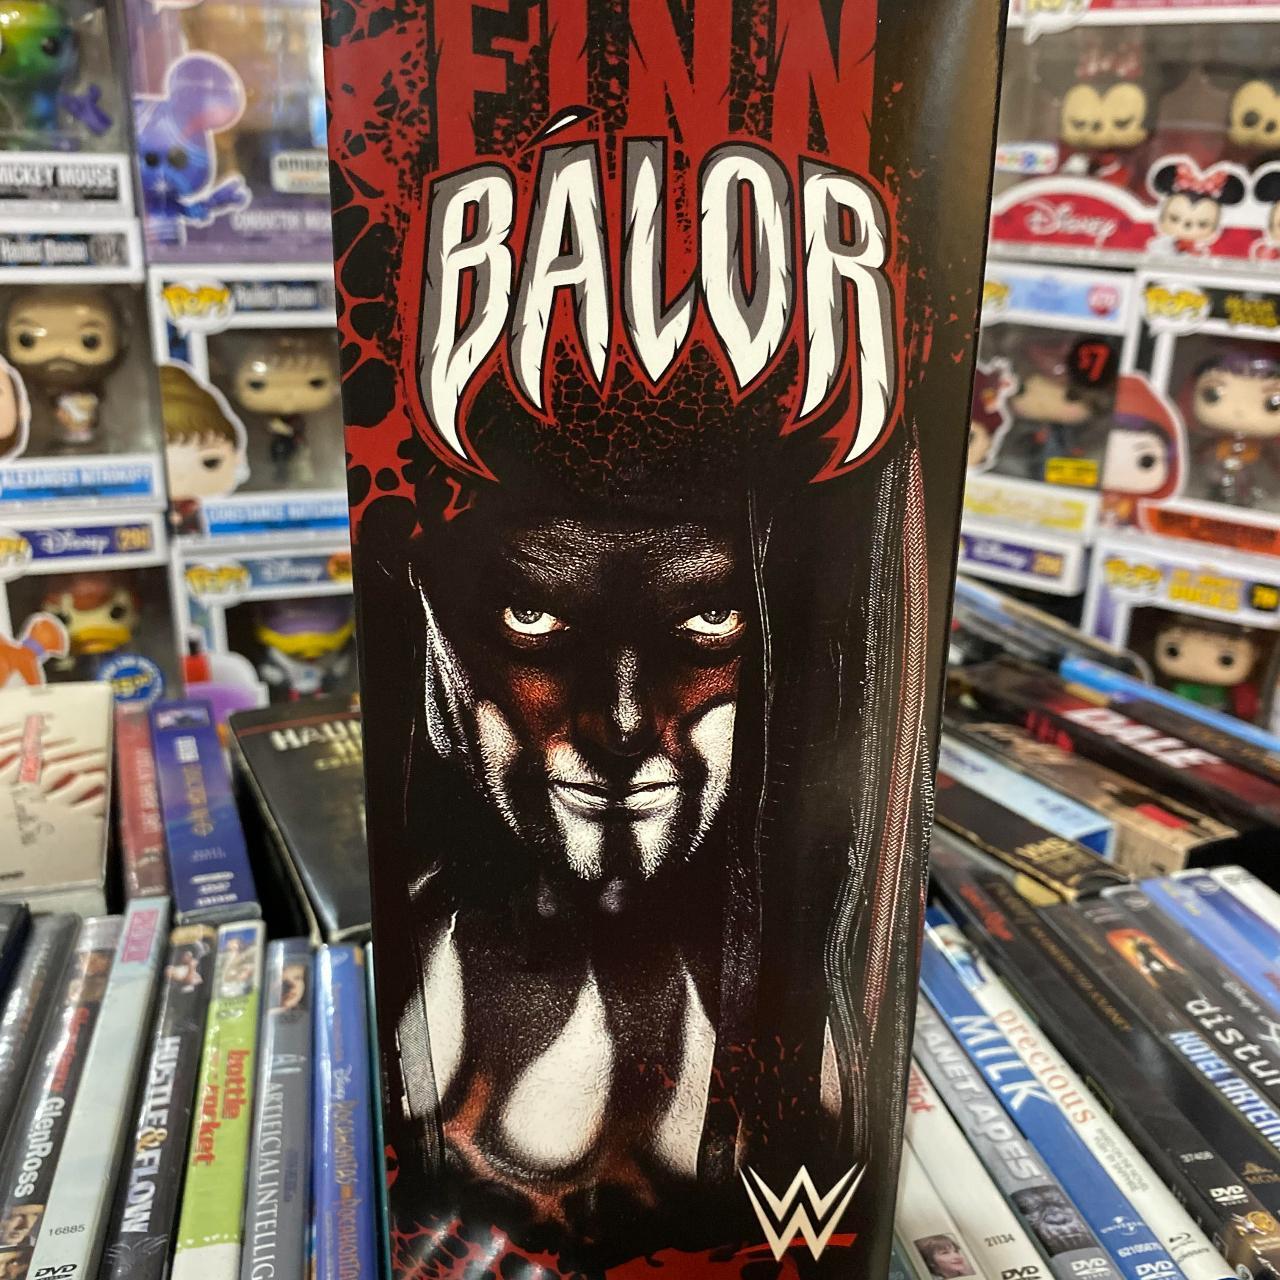 Product Image 4 - The Demon Finn Balor Figurine
Exclusive